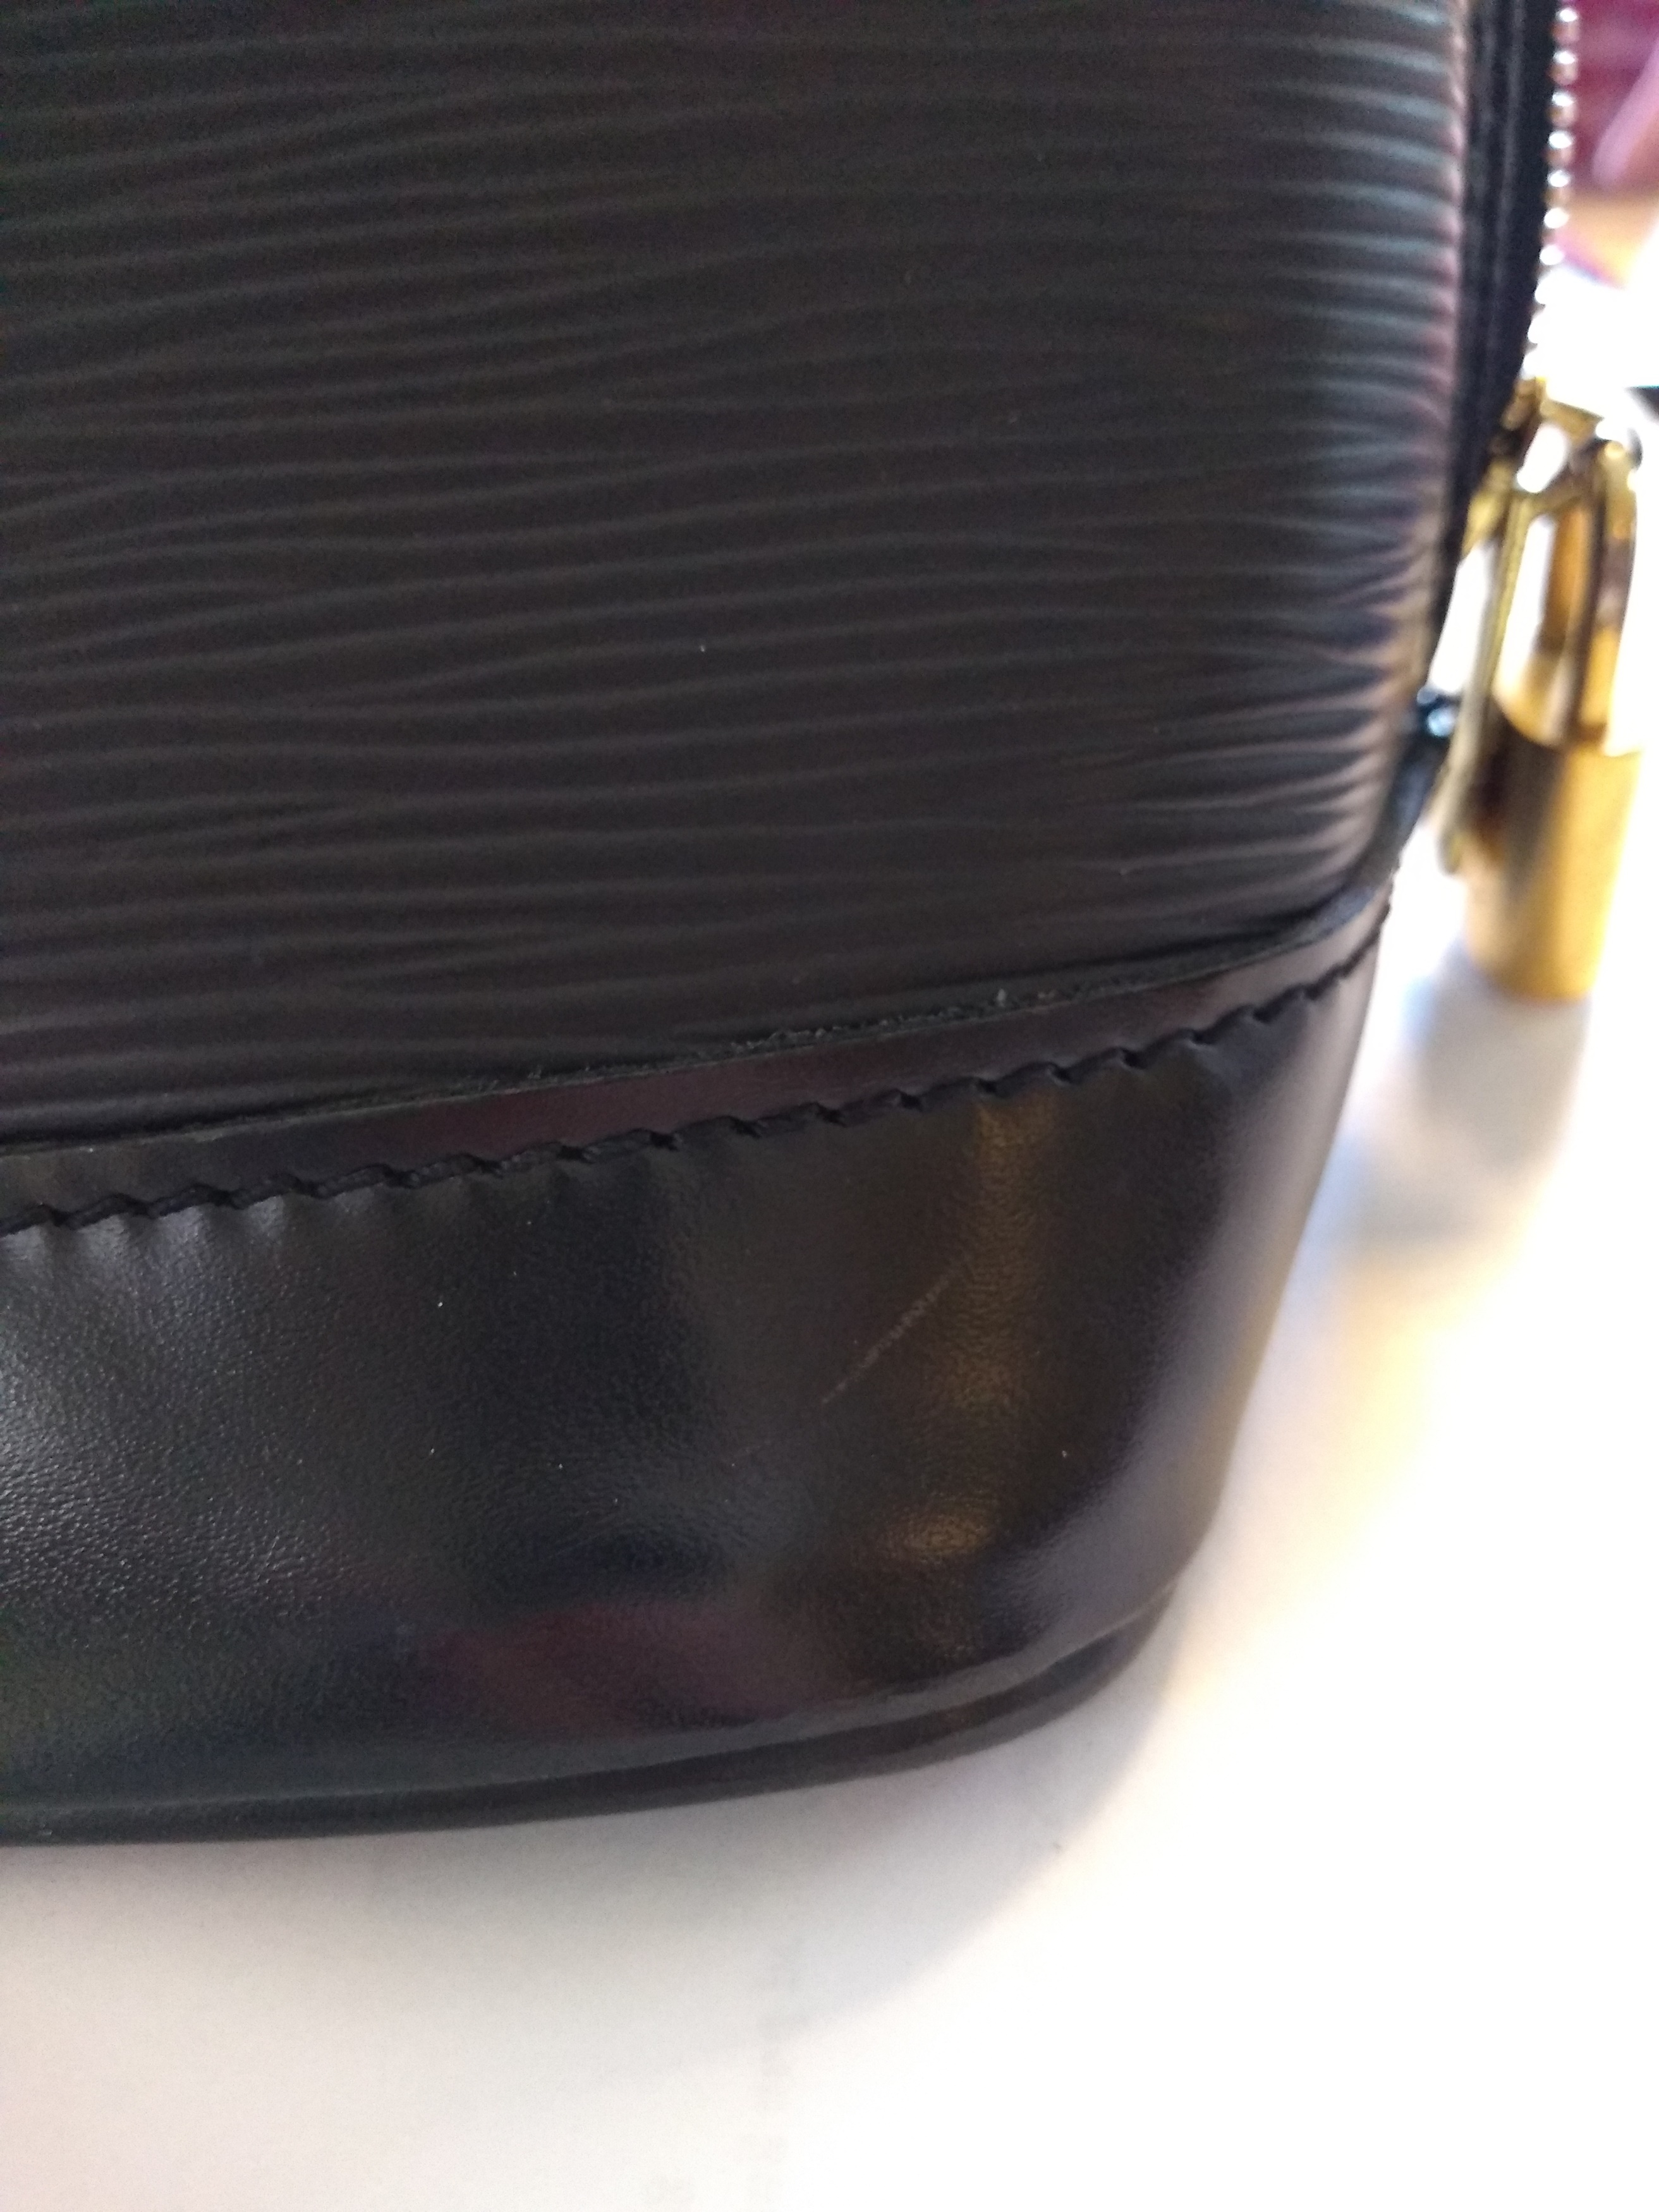 Louis Vuitton Black Noir Epi Leather Alma GM bag Louis Vuitton